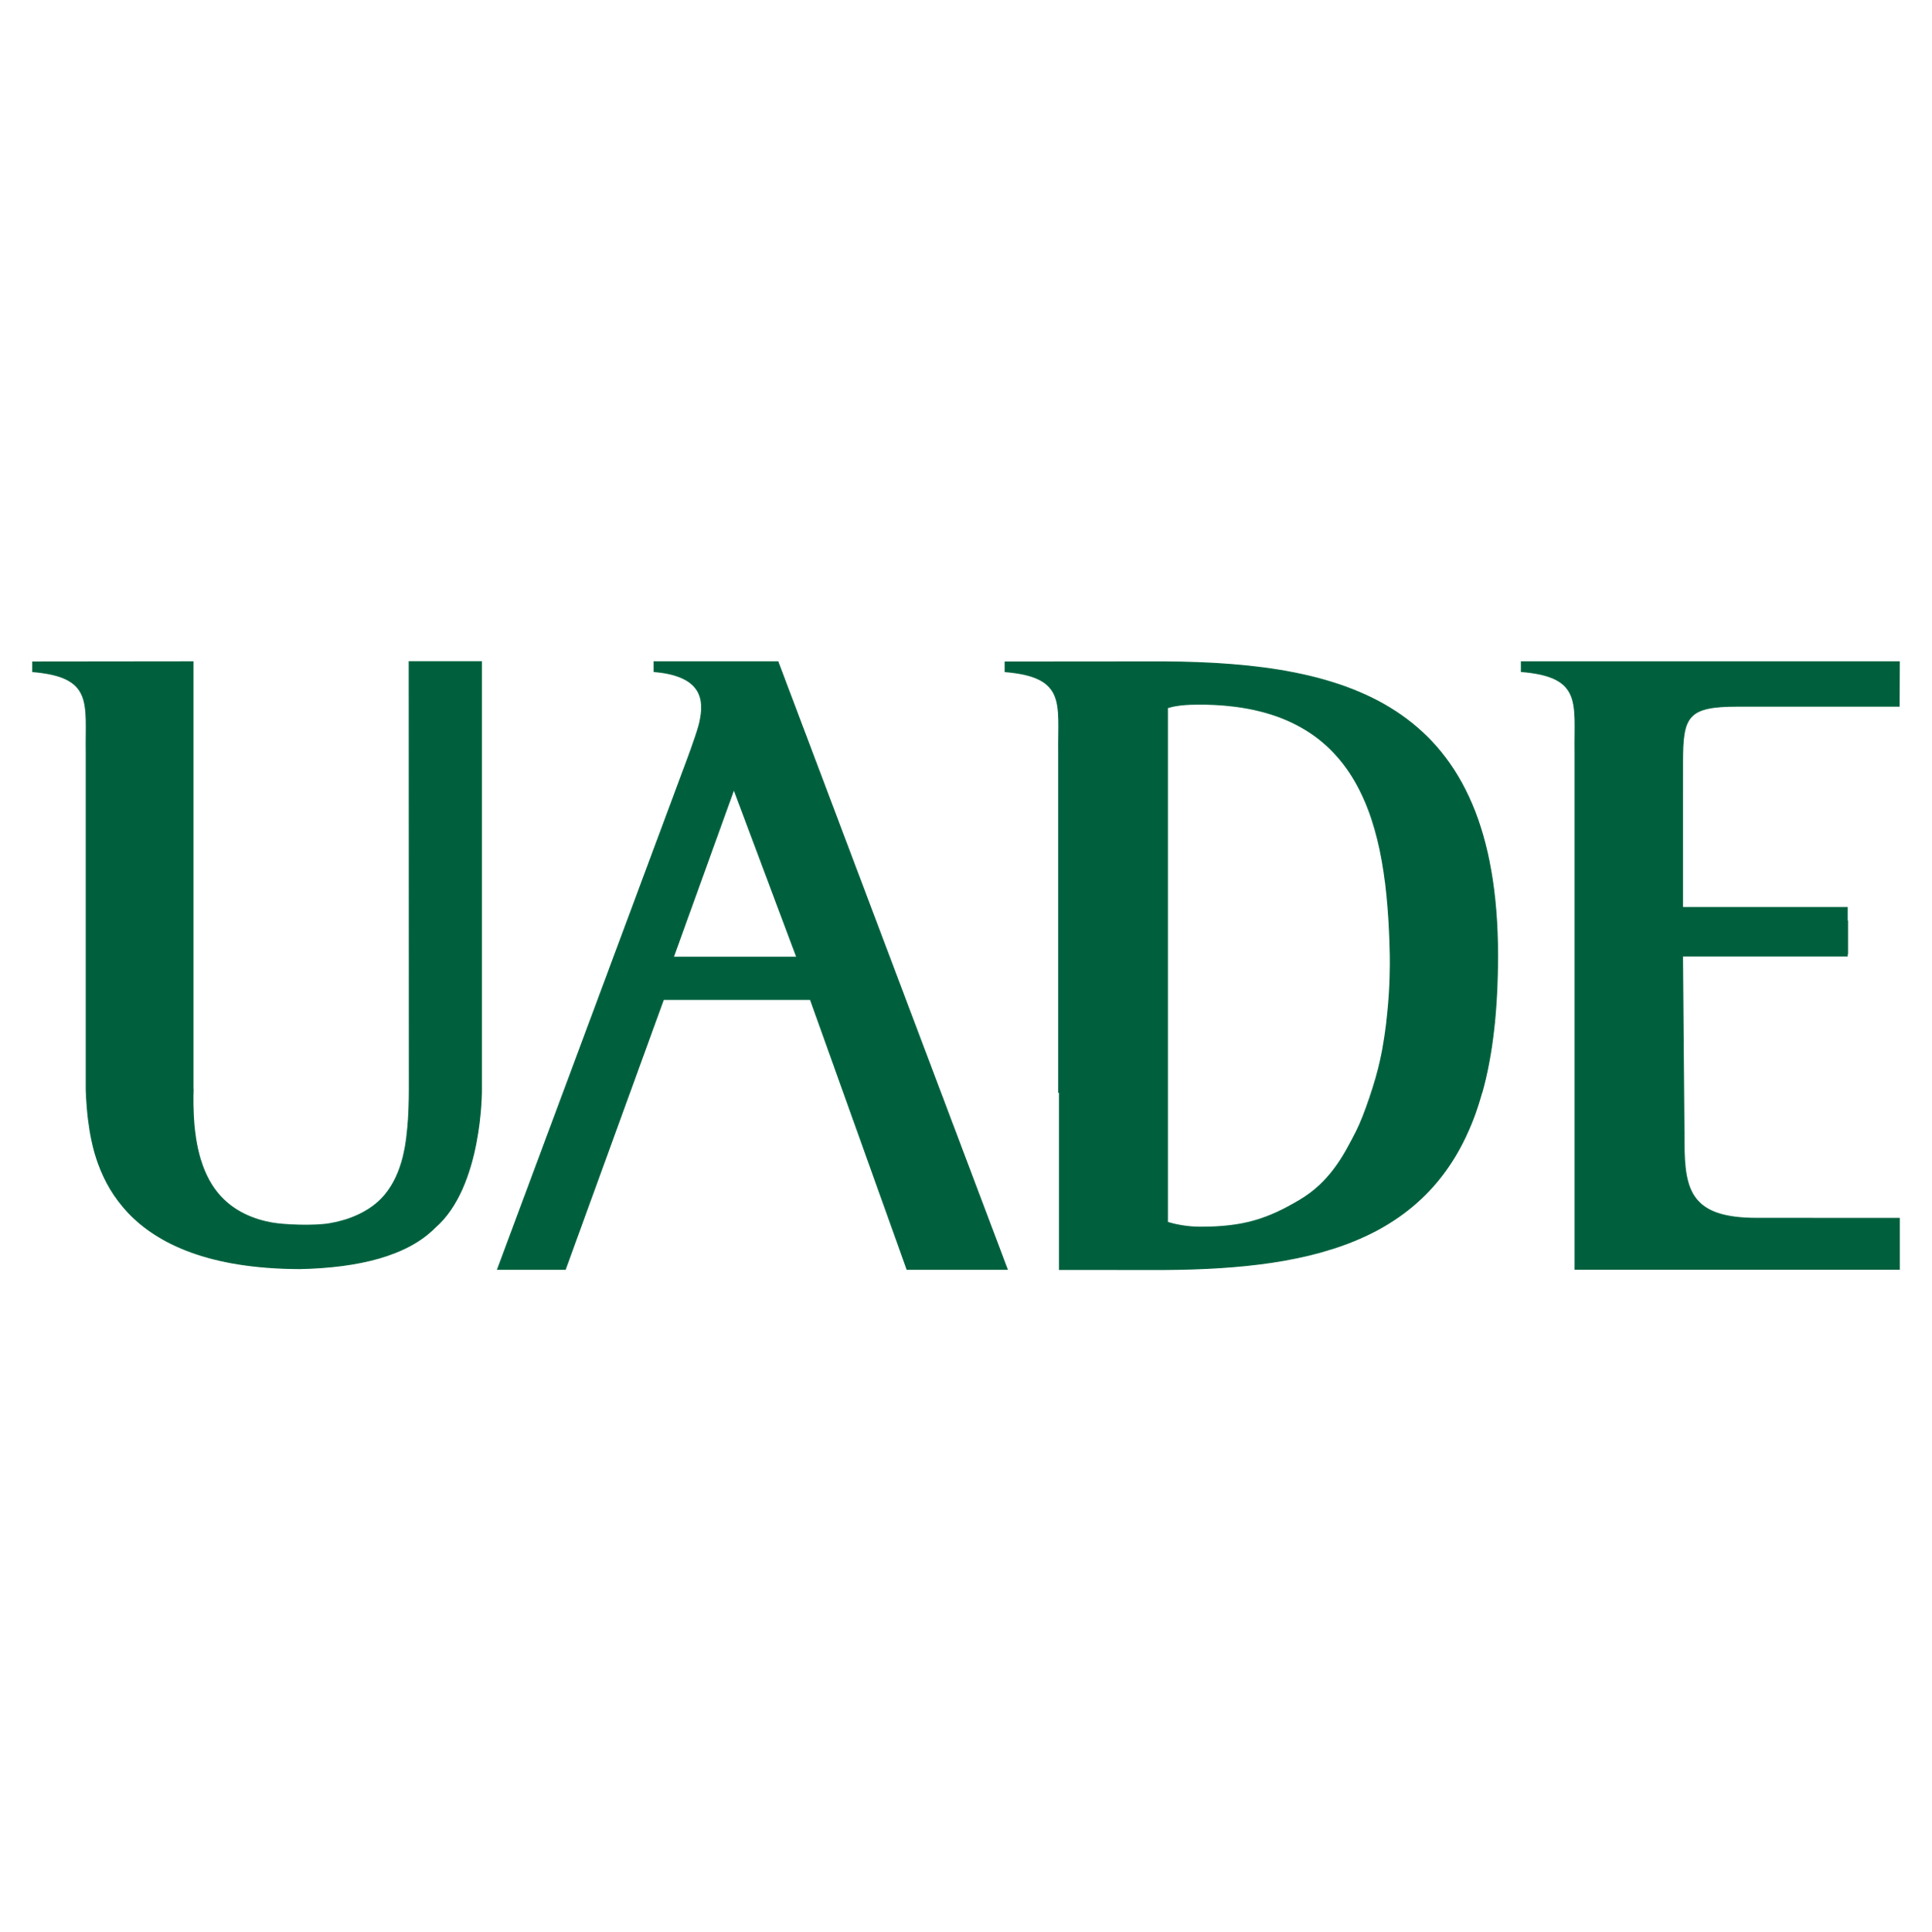 Looo Uade Logo  Transparent Photo